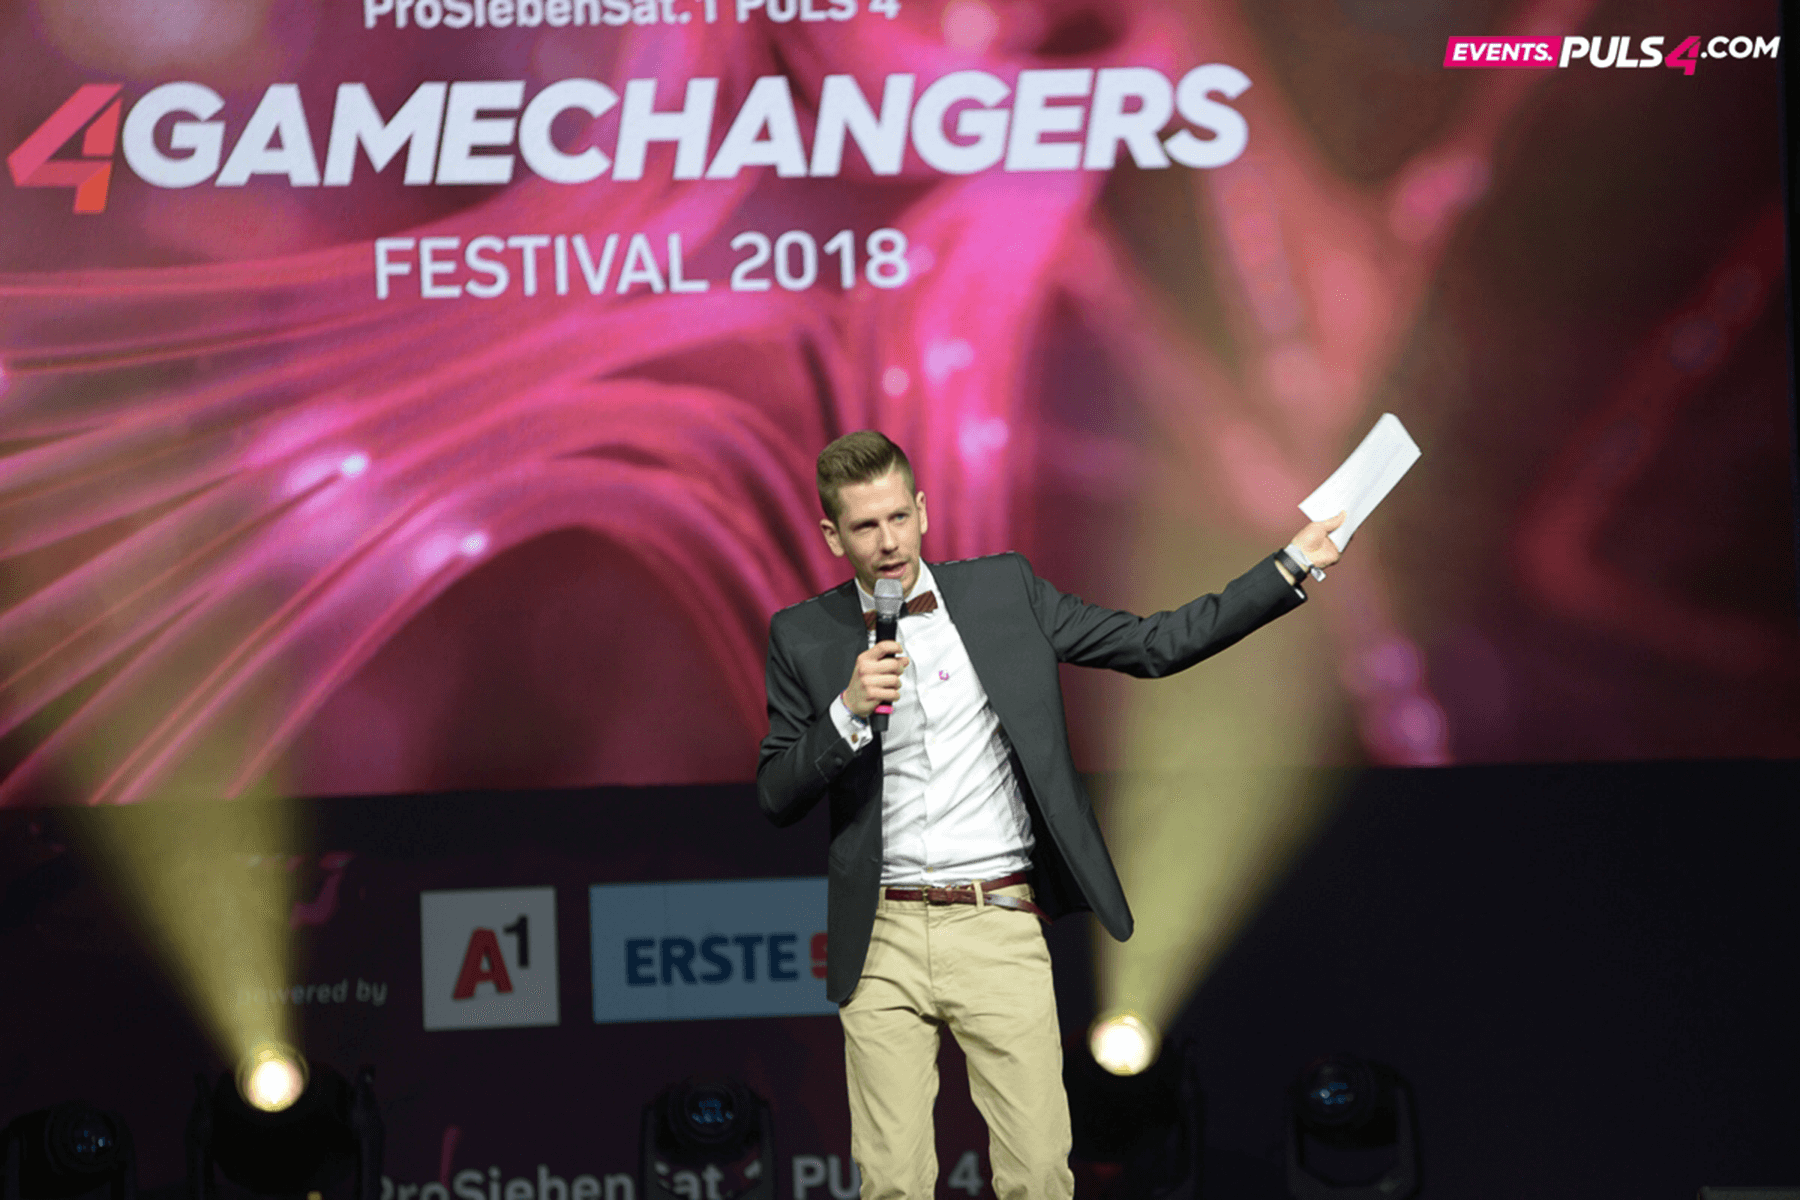 Roman Kreid Moderation 4GAMECHANGERS FESTIVAL 2018